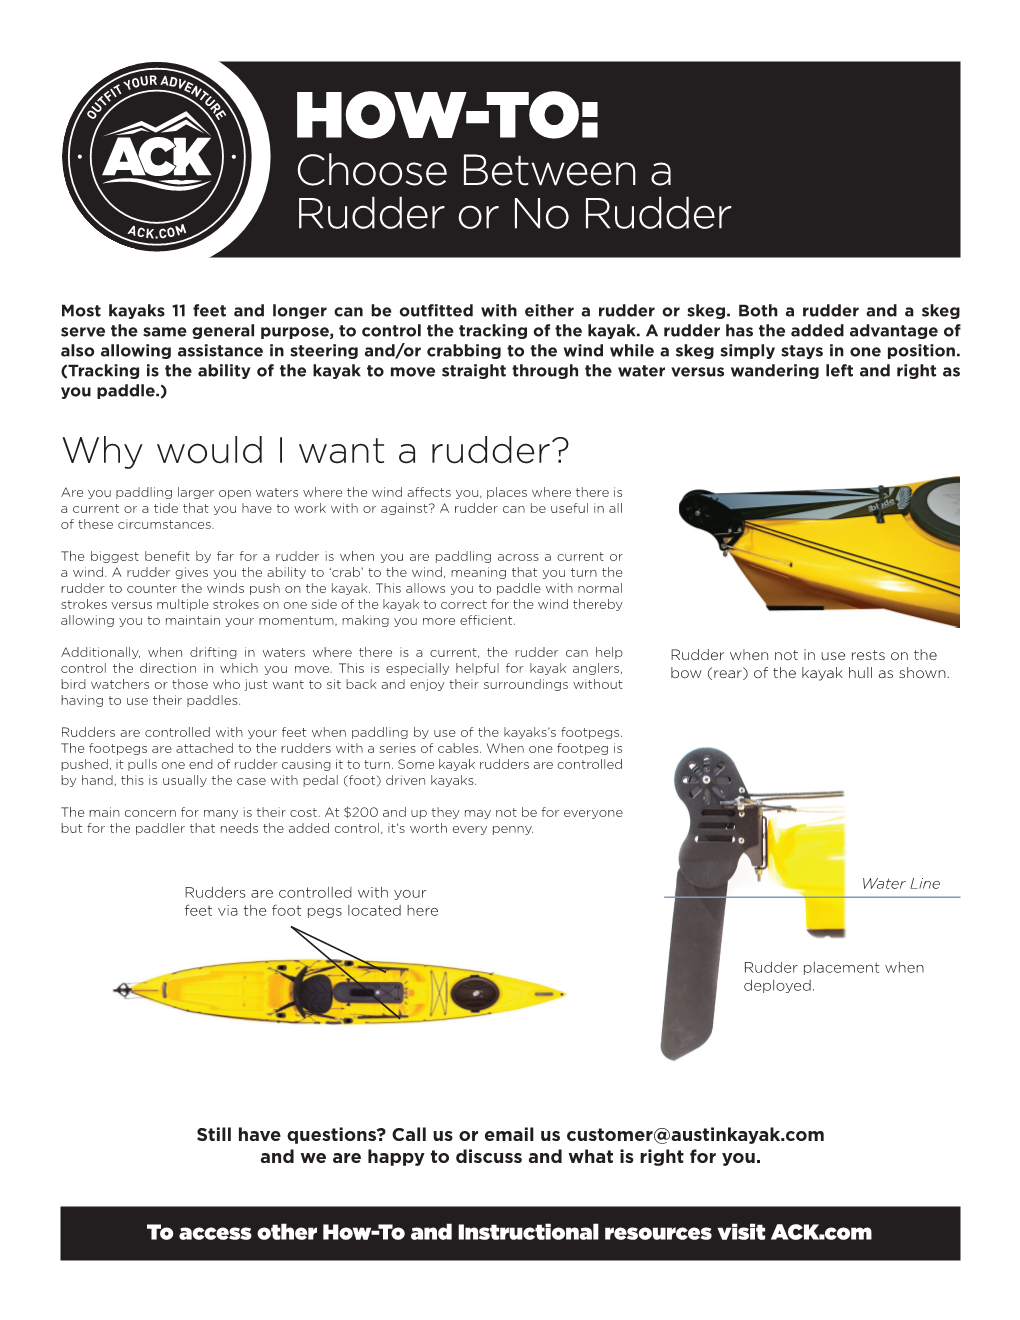 HOW-TO: Choose Between a Rudder Or No Rudder